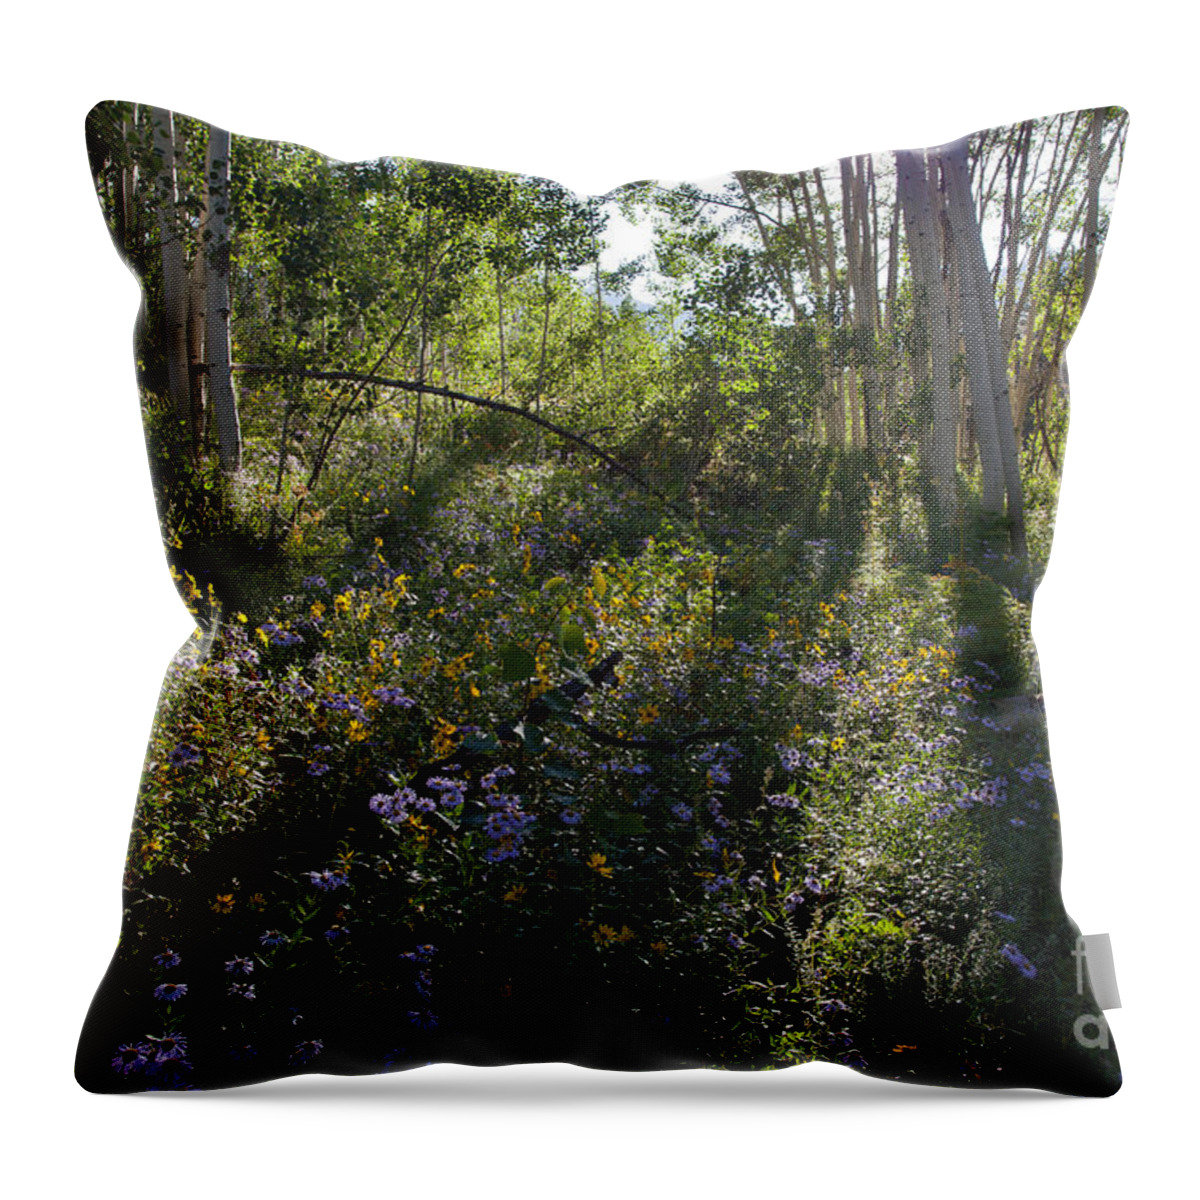 Quaking Aspen Throw Pillow featuring the photograph Quaking Aspen Woodland #2 by Greg Dimijian